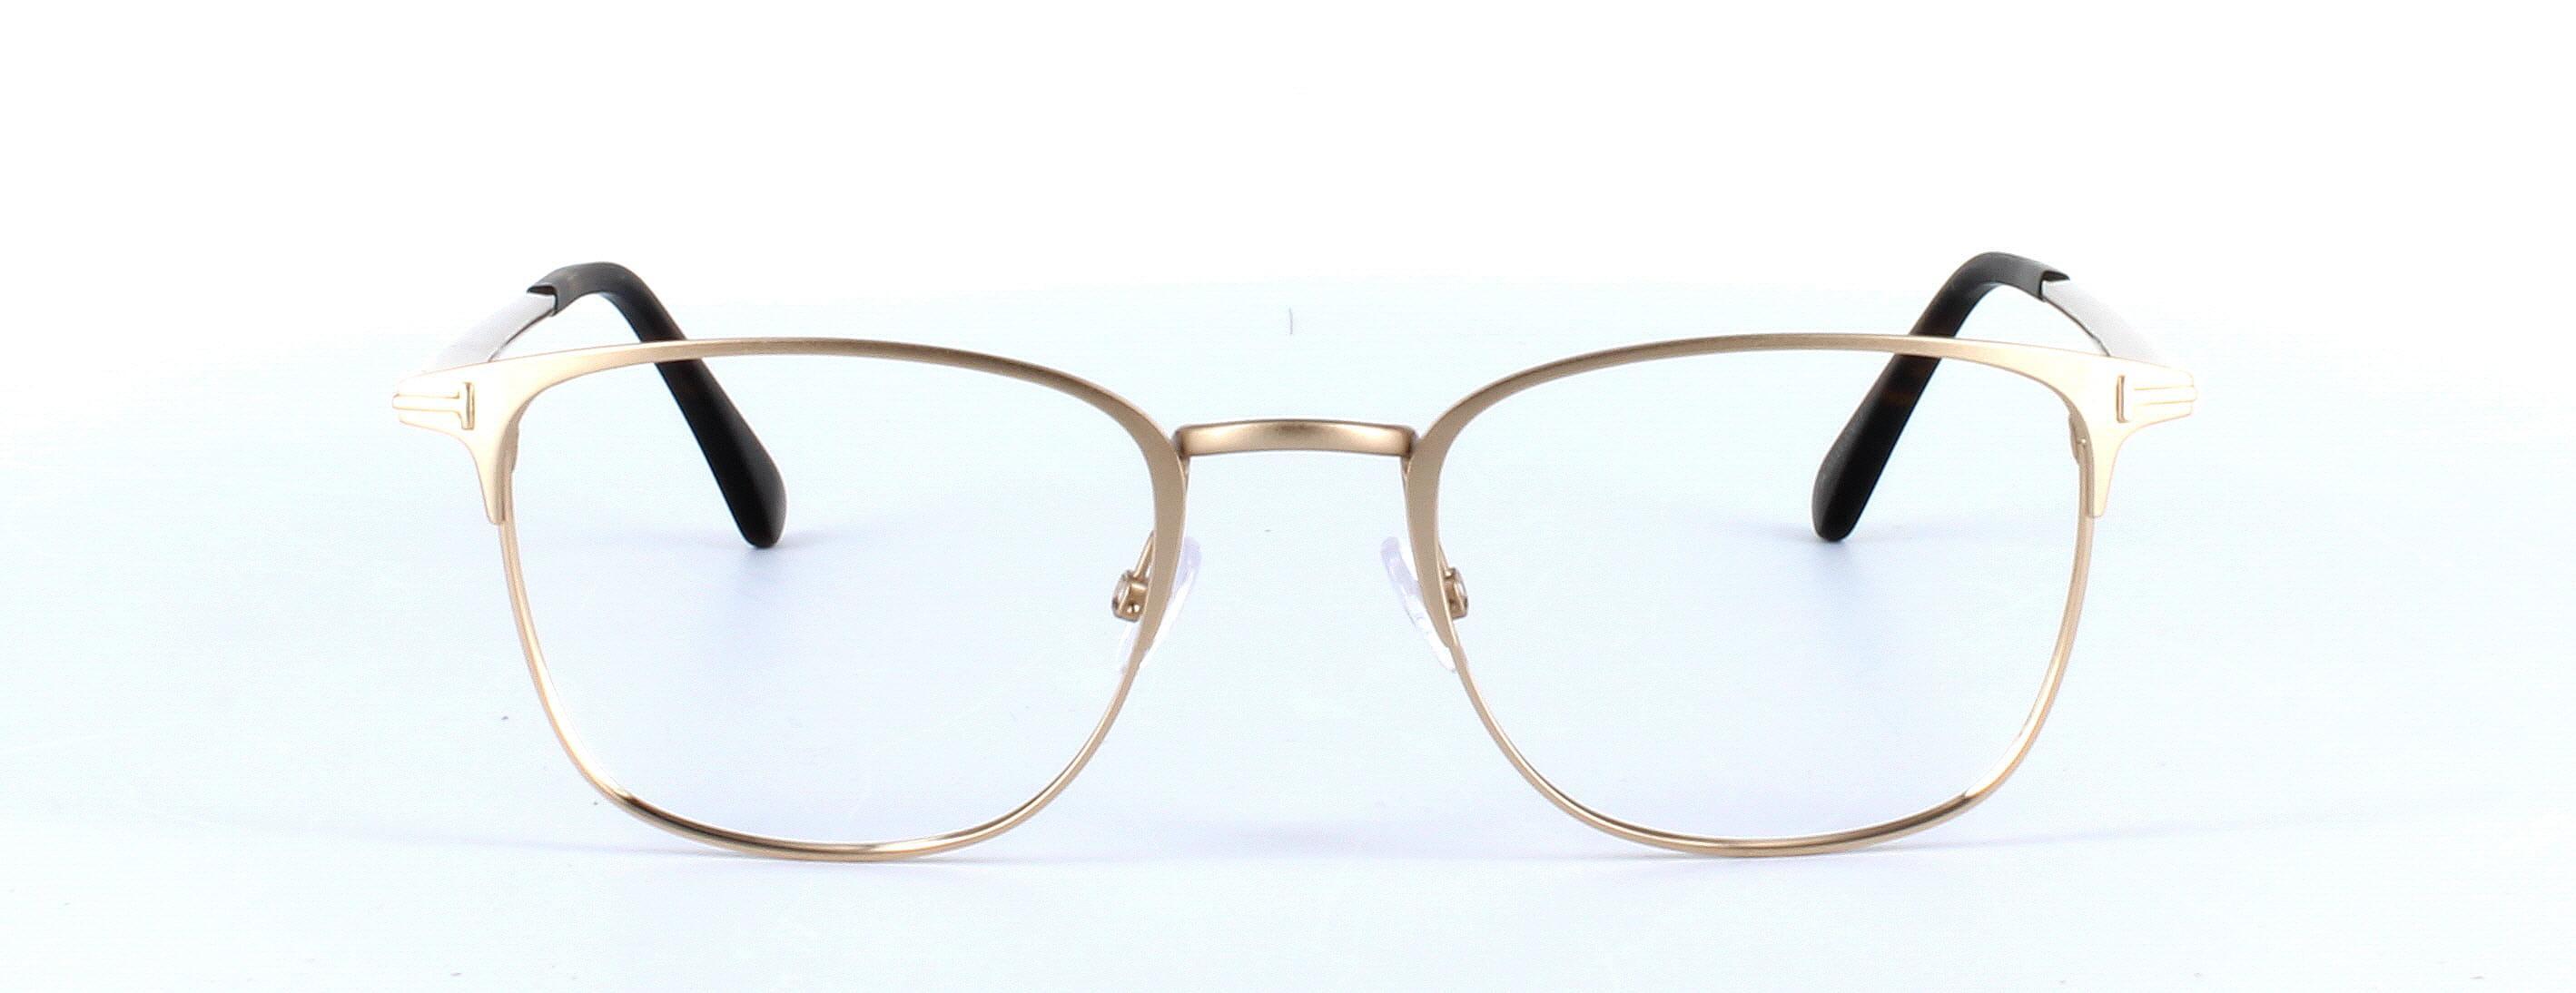 Ladies Tom Ford metal glasses - Matt gold - image 5